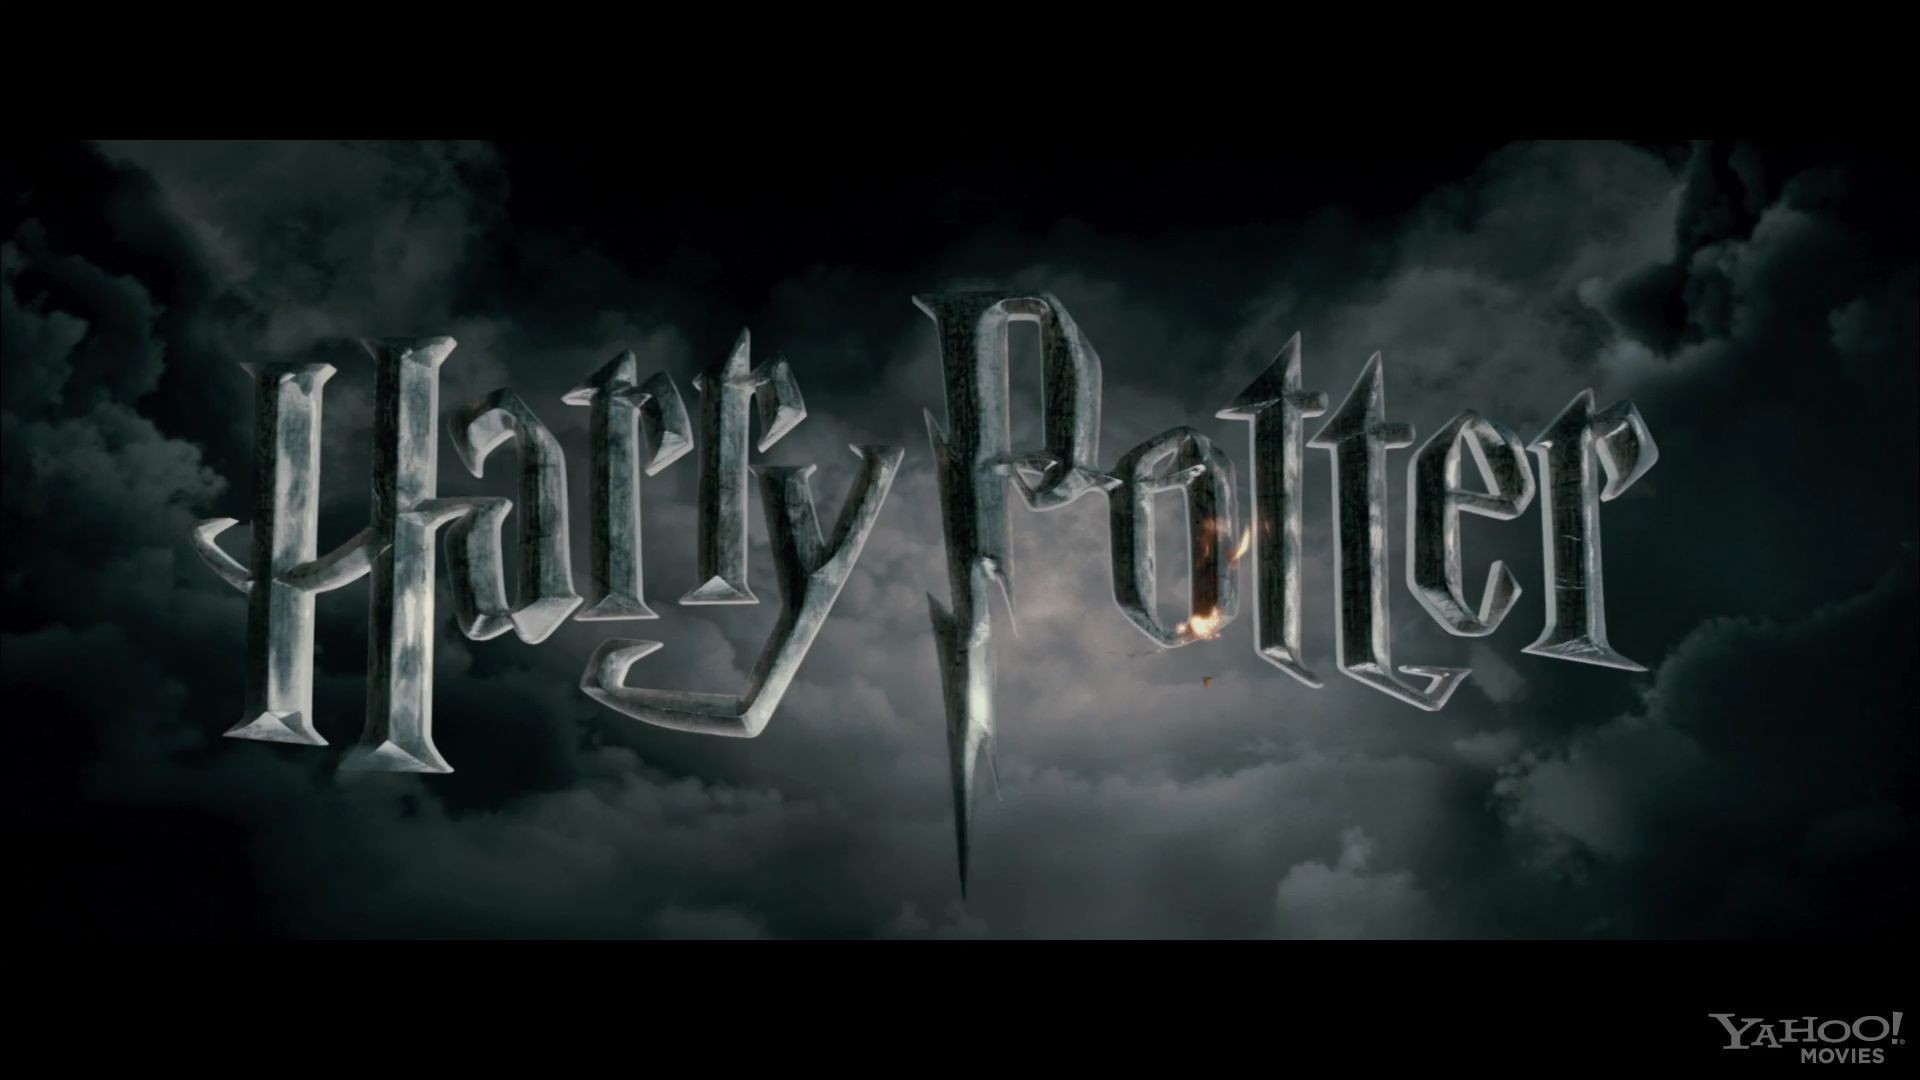 harry potter wallpaper download,text,font,darkness,black,movie